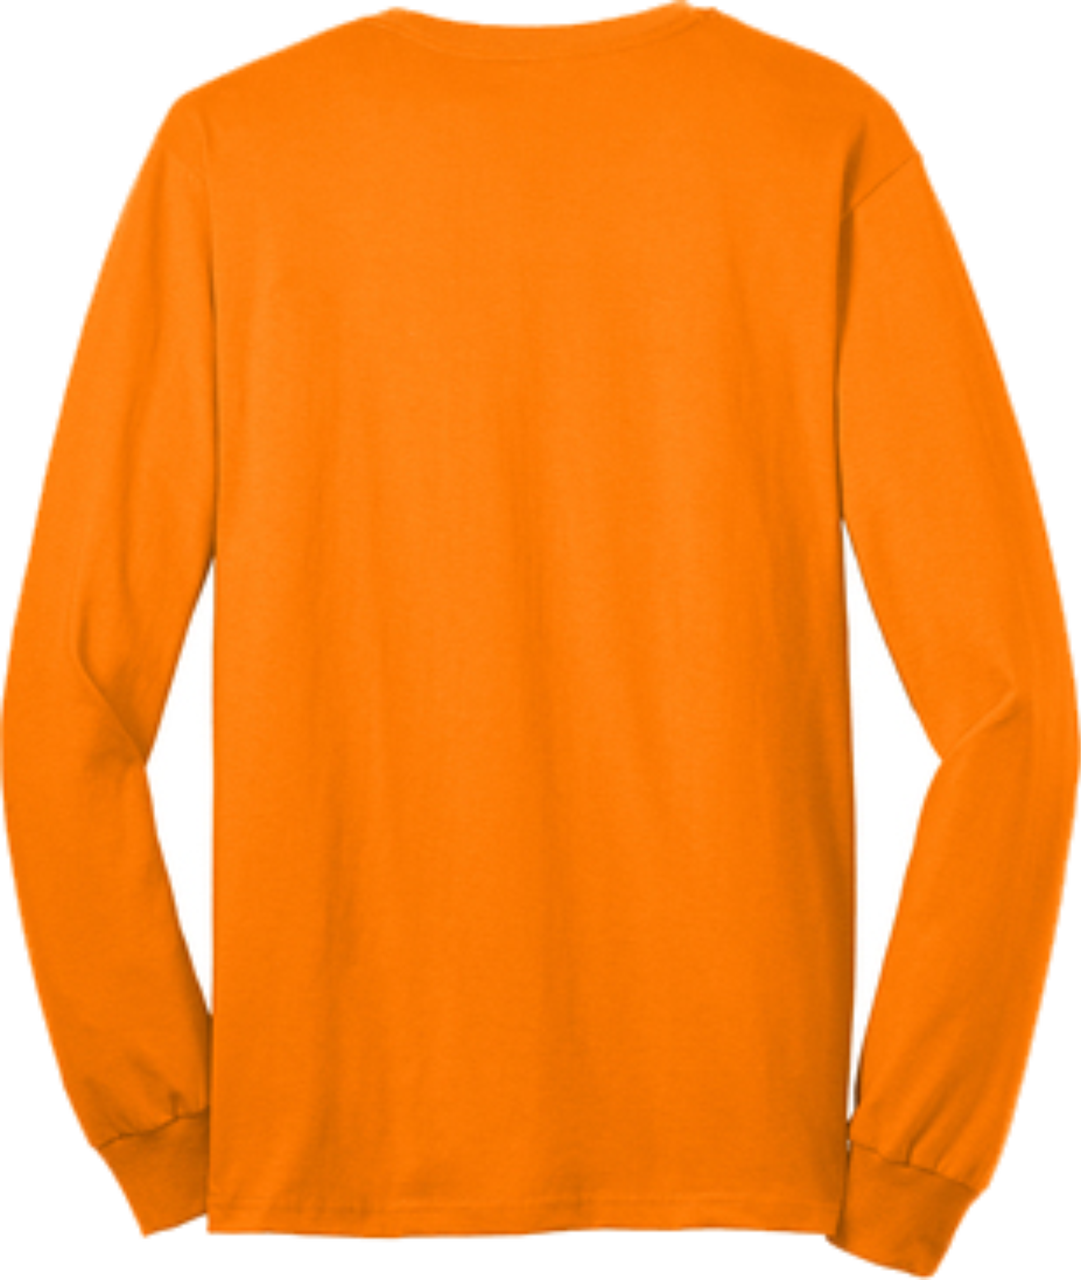 Shirt Orange PNG Clipart Background